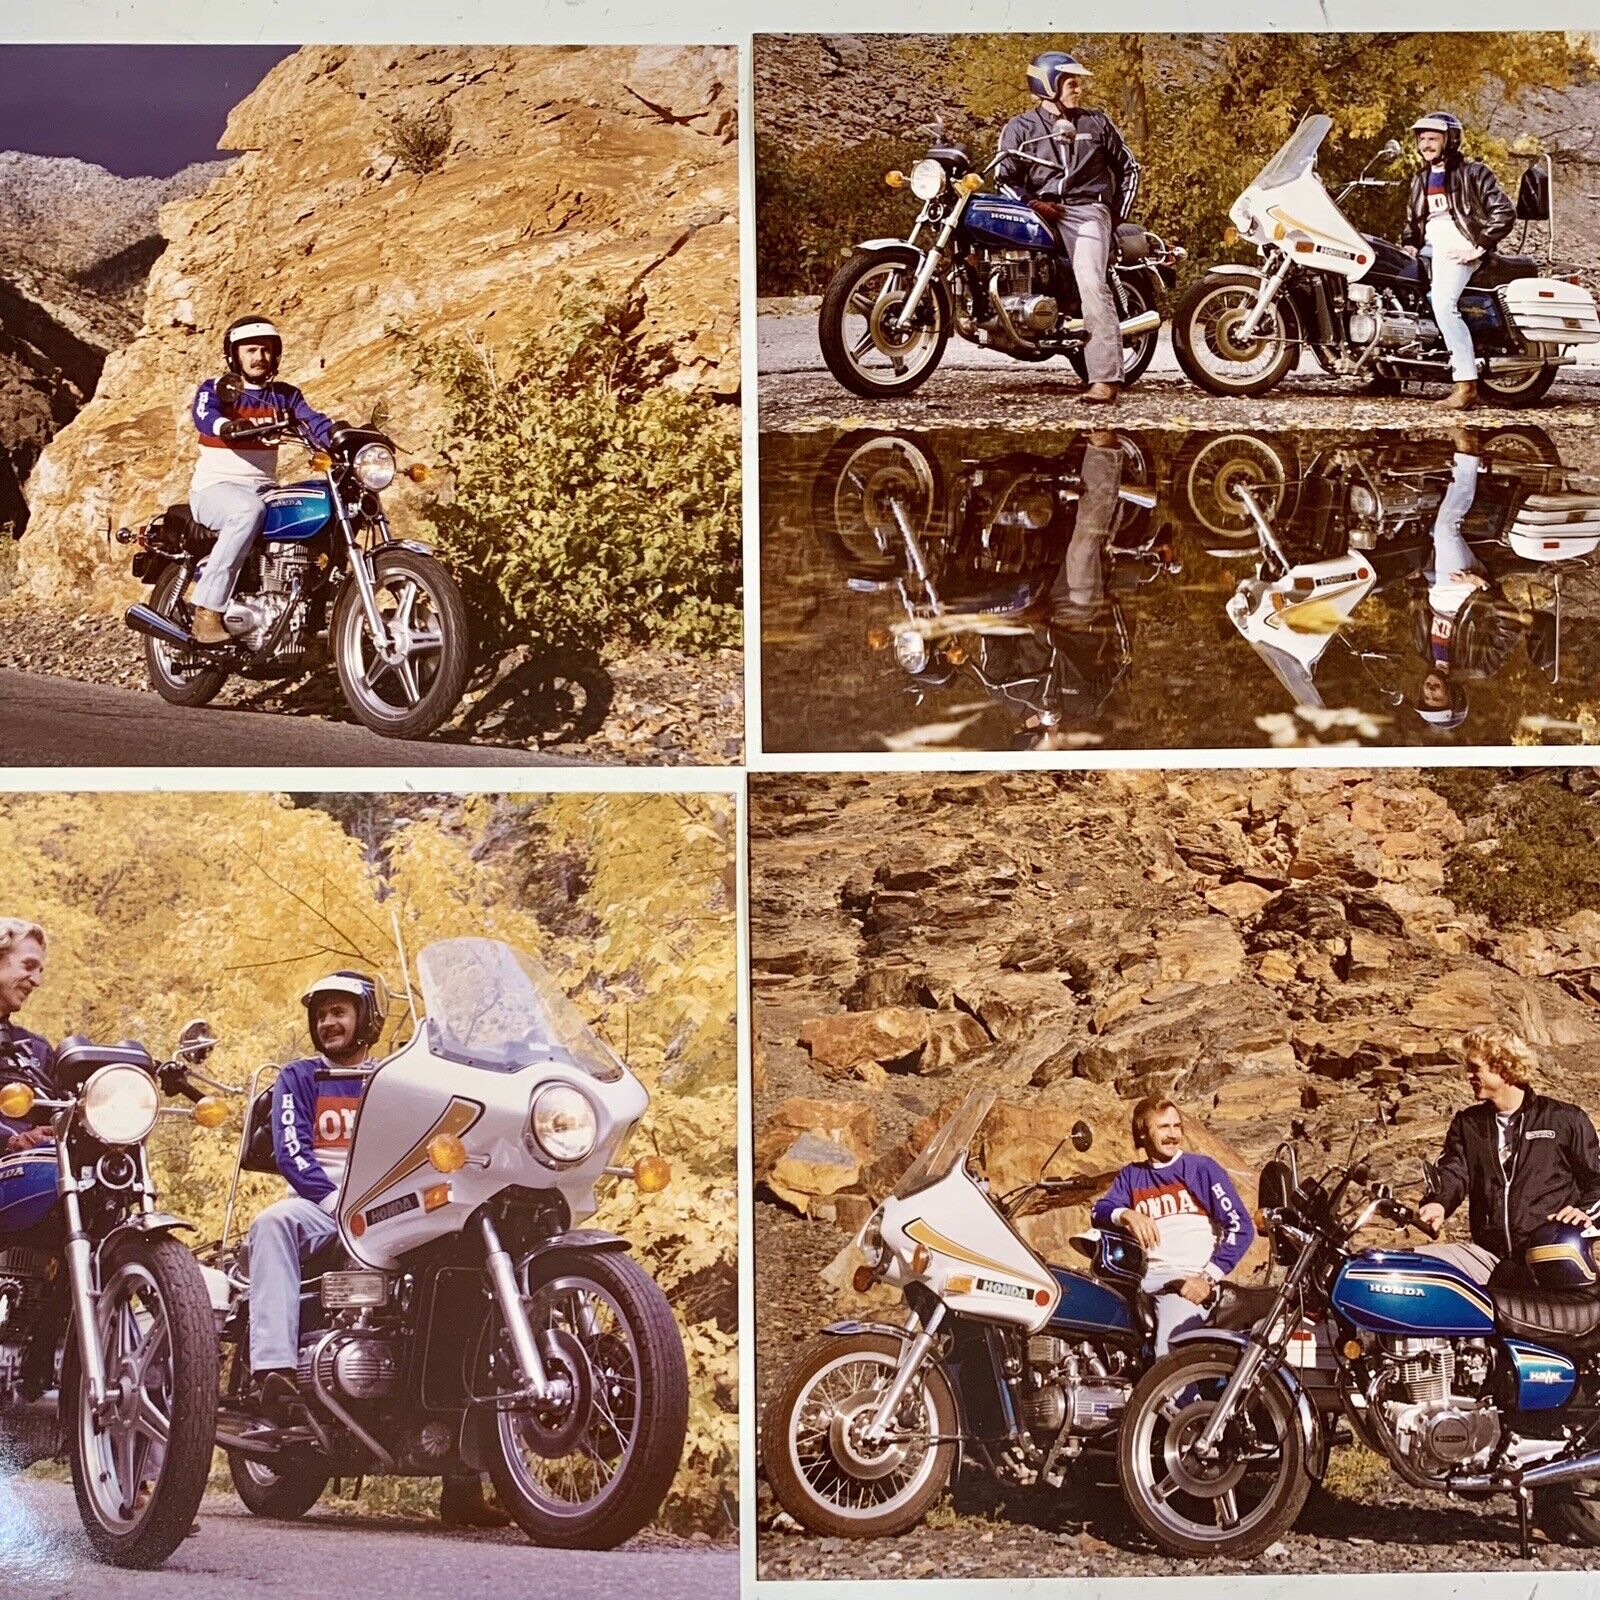 VTG 1970’s Honda Street Bikes Gold Wing, Fall Canyon Ride Photo Lot Of 4, 8”x10”